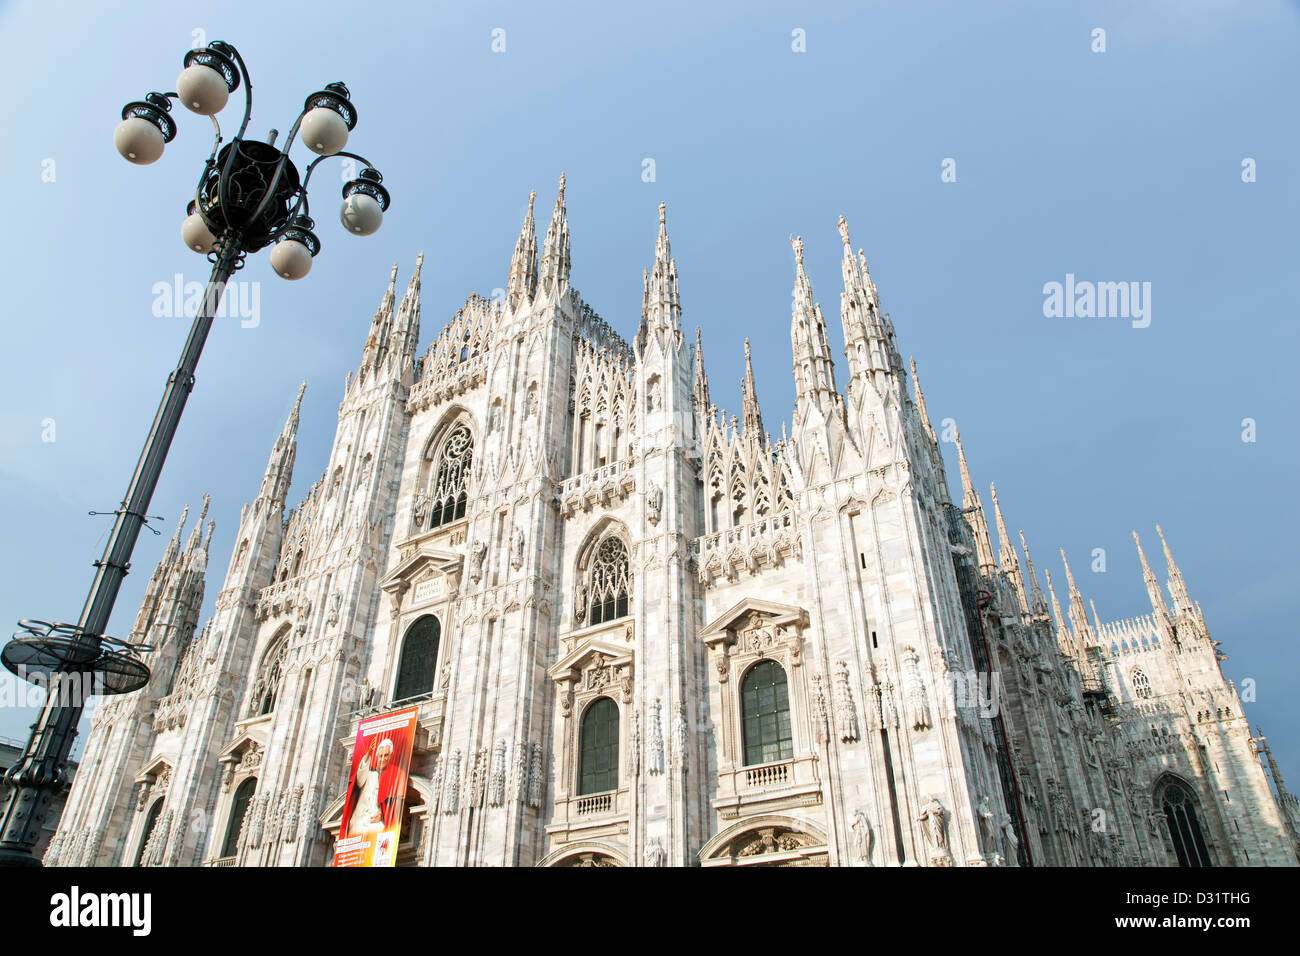 La cathédrale de Milan (Duomo di Milano), la place du Duomo, Milan, Italie Banque D'Images